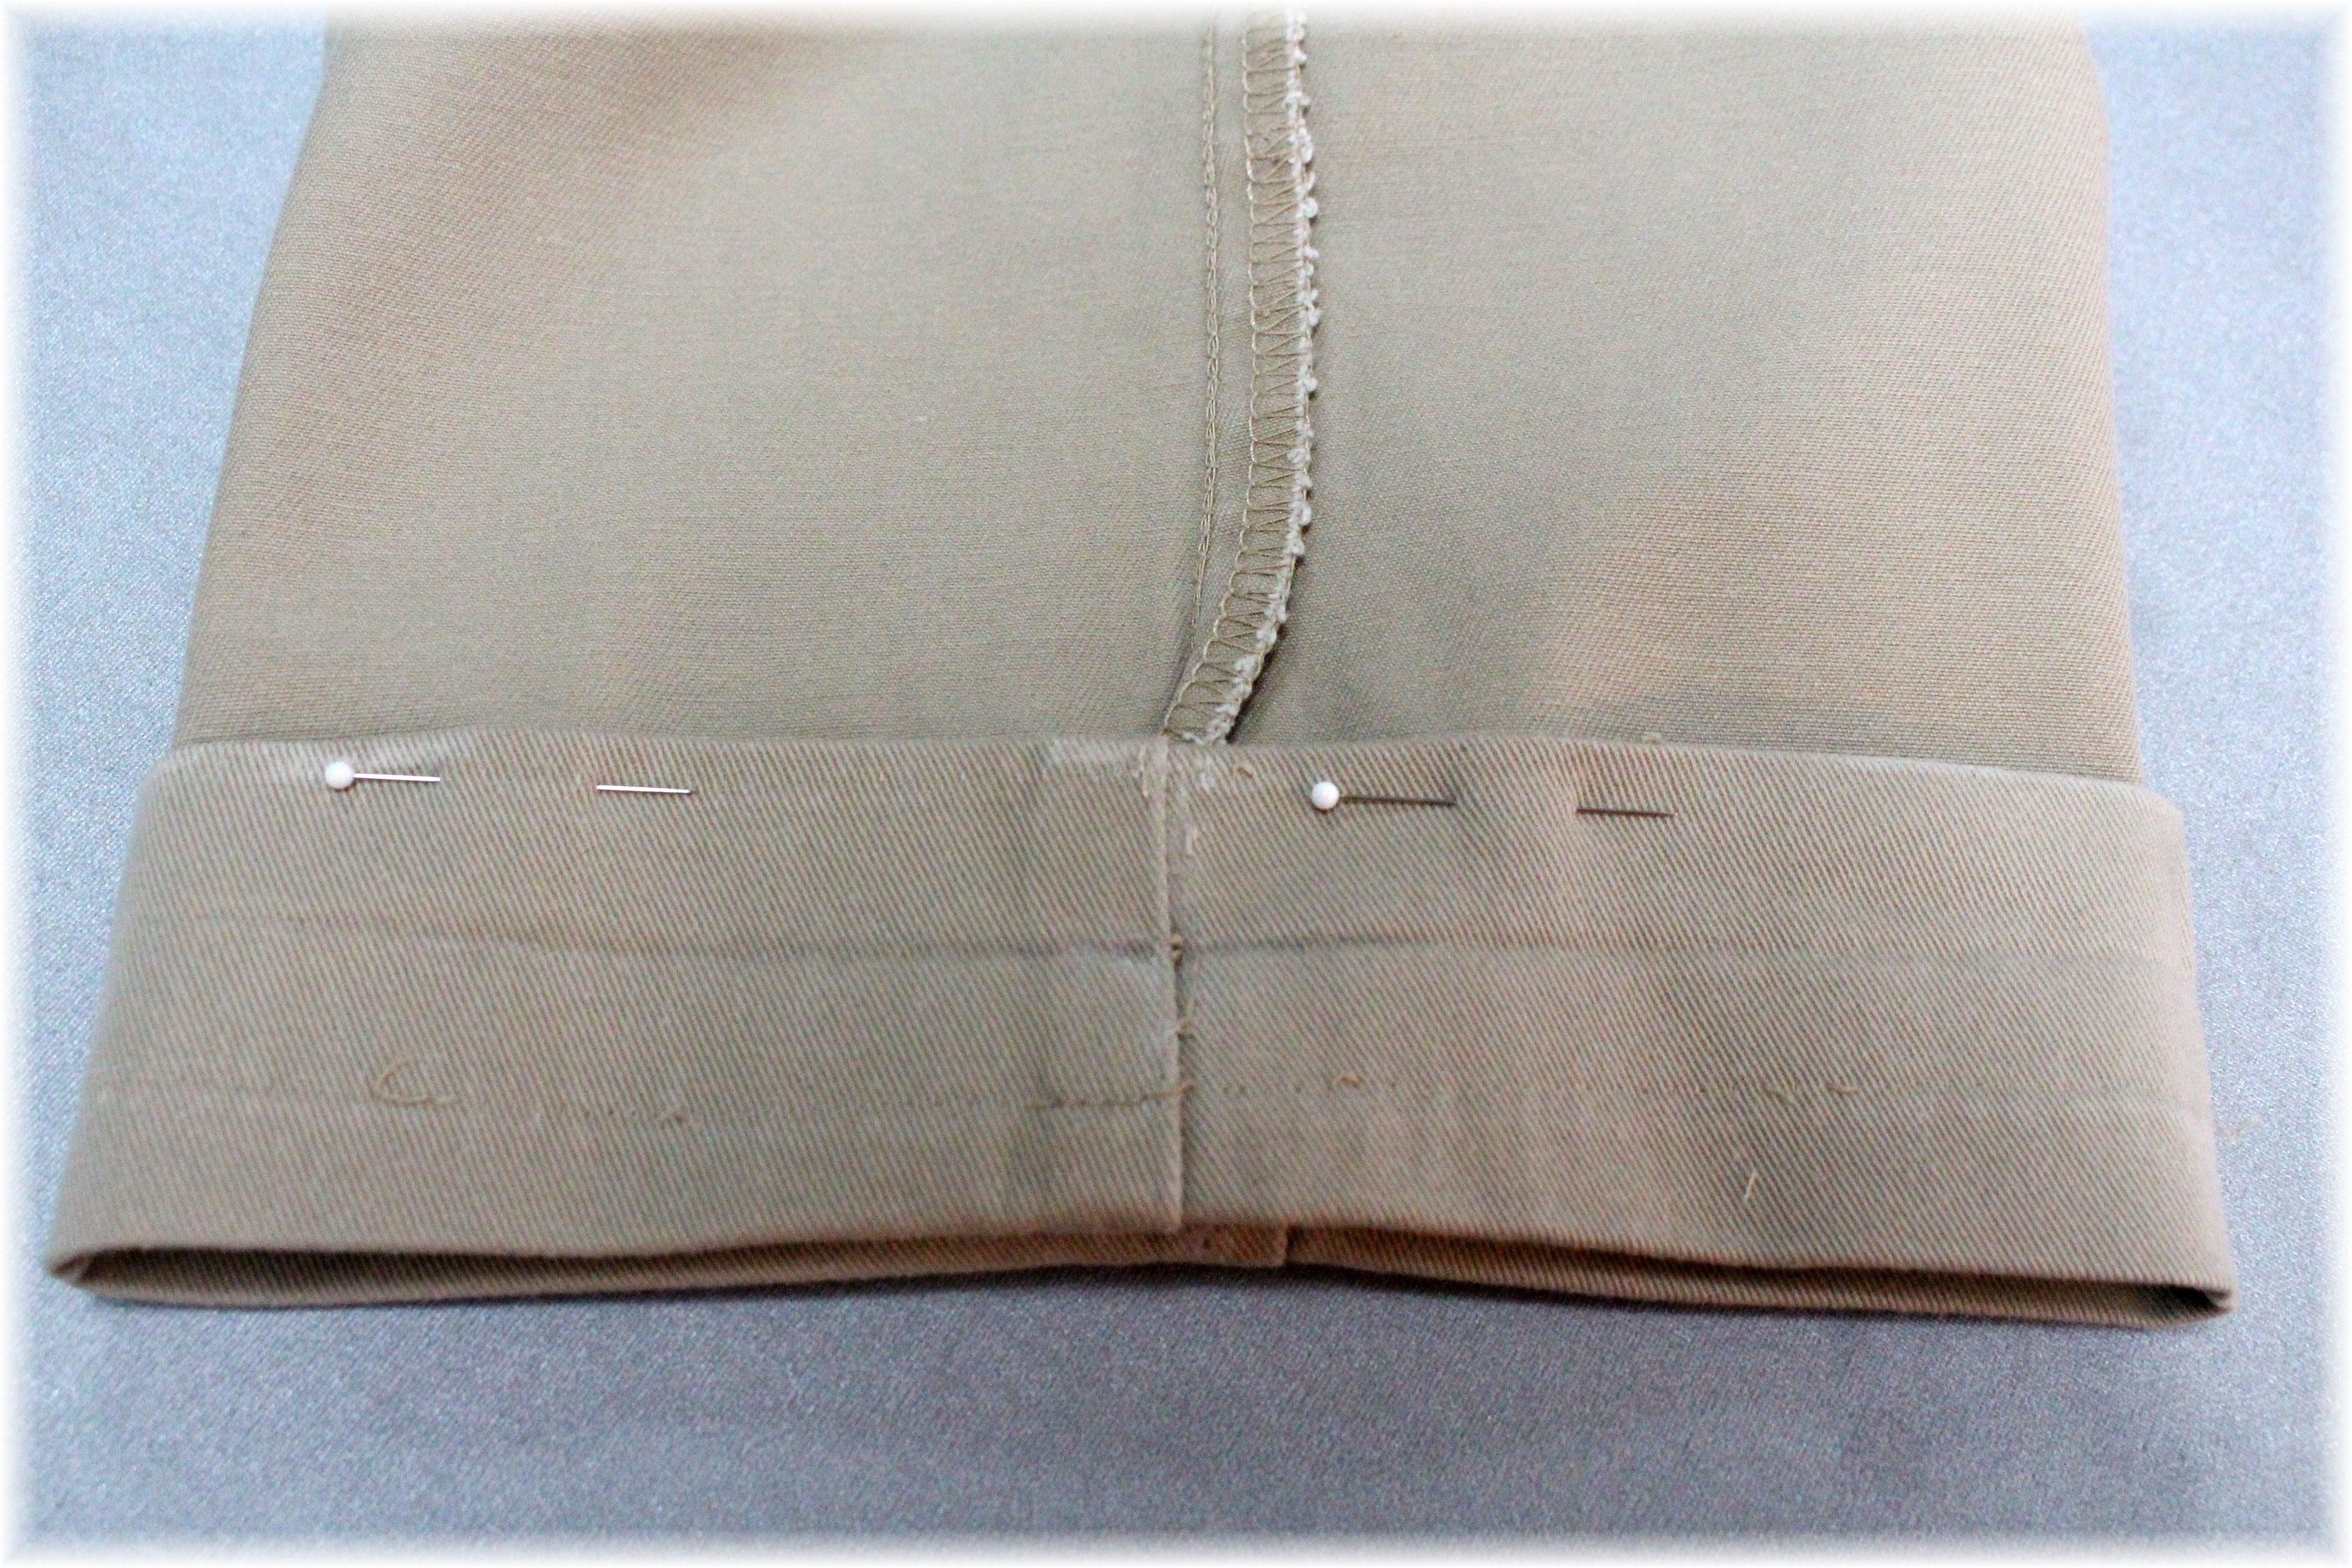 J Stern Designs l Quick Tip How to make a Cuffed Hem on Dress Pants   YouTube